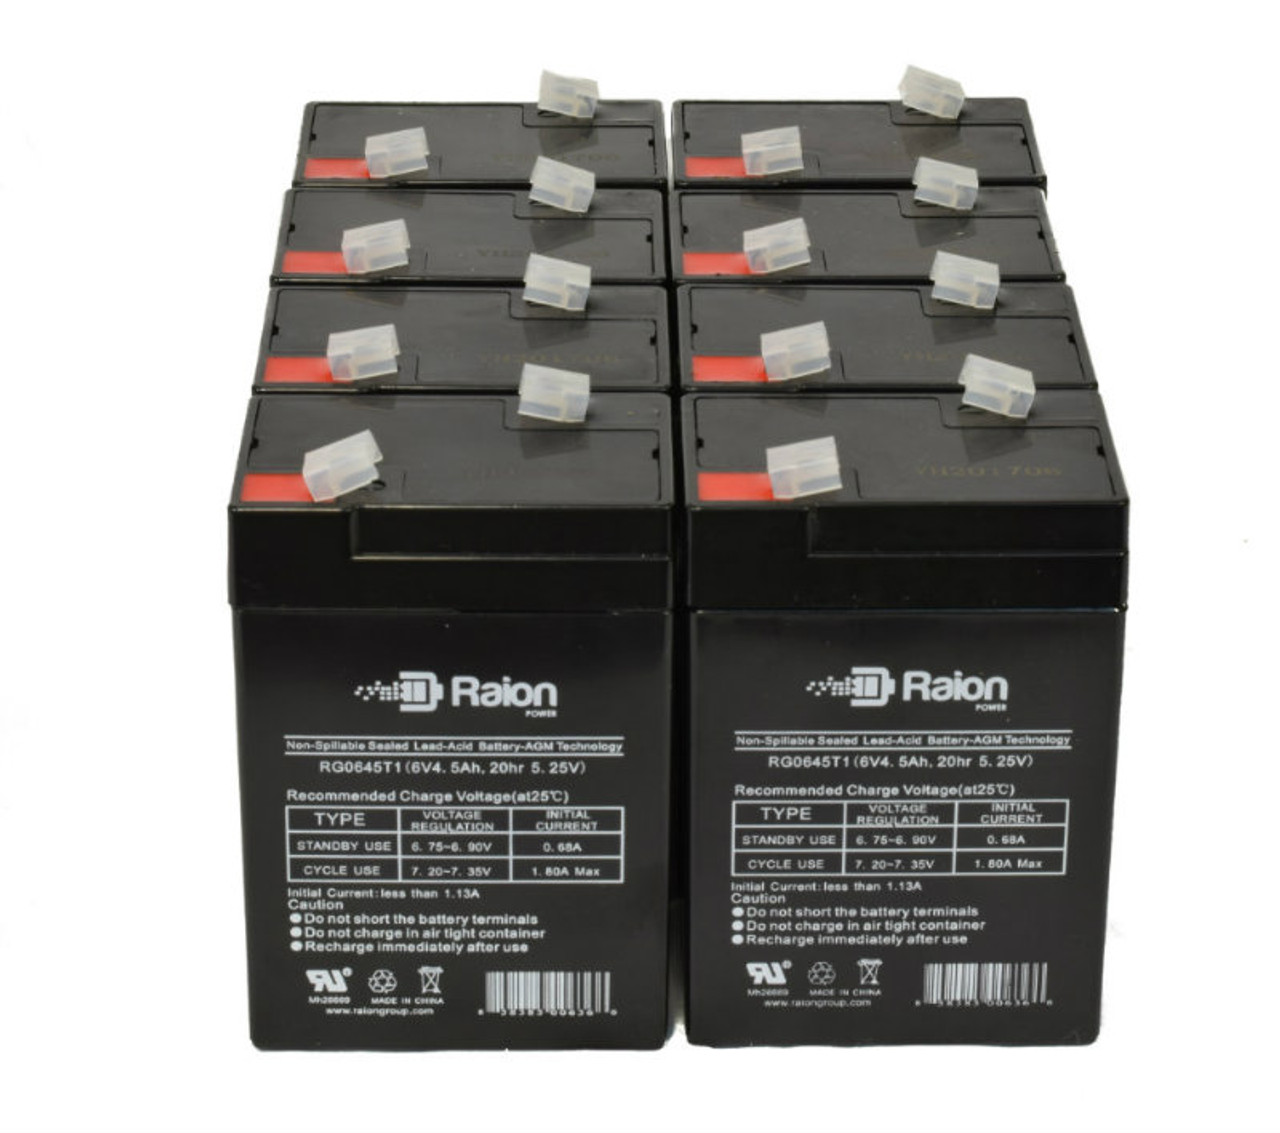 Raion Power 6V 4.5Ah Replacement Emergency Light Battery for Tork 650 - 8 Pack